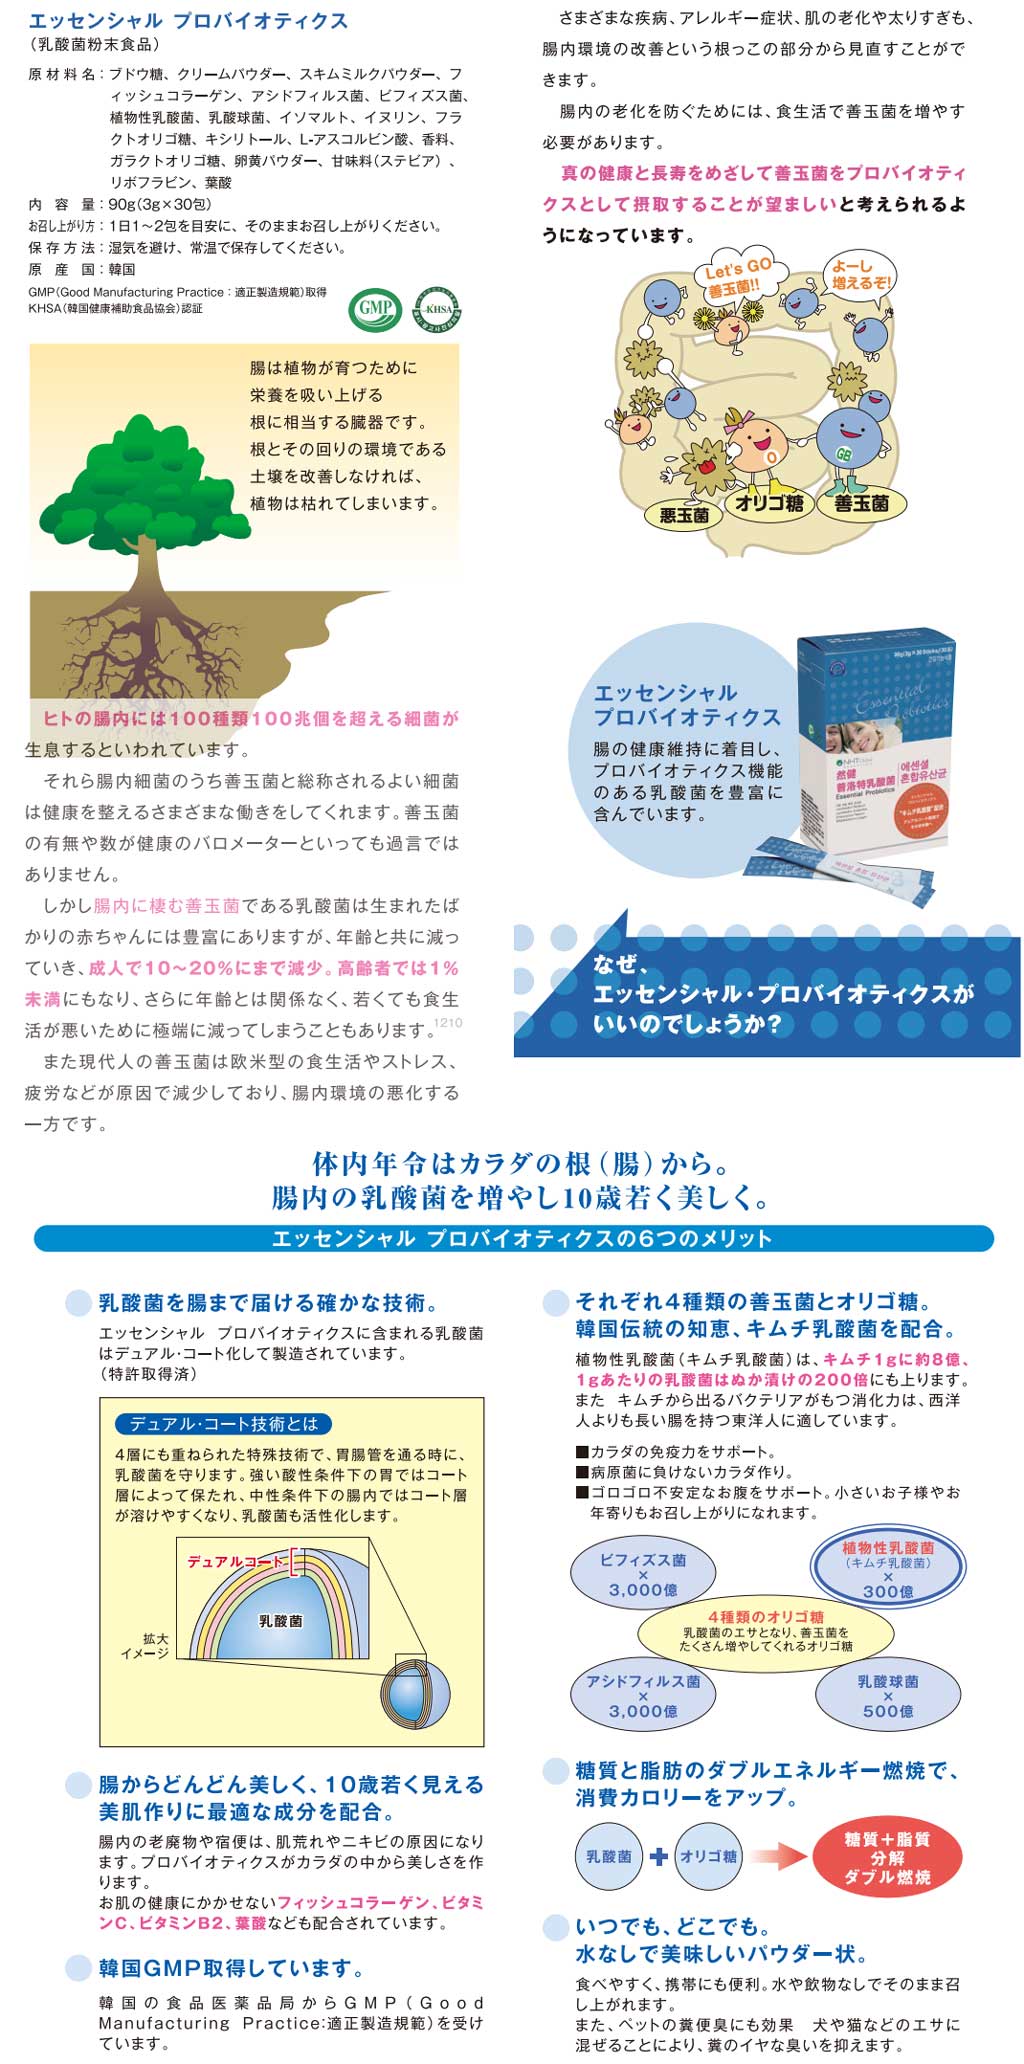 esential probiotics japanese info nht global